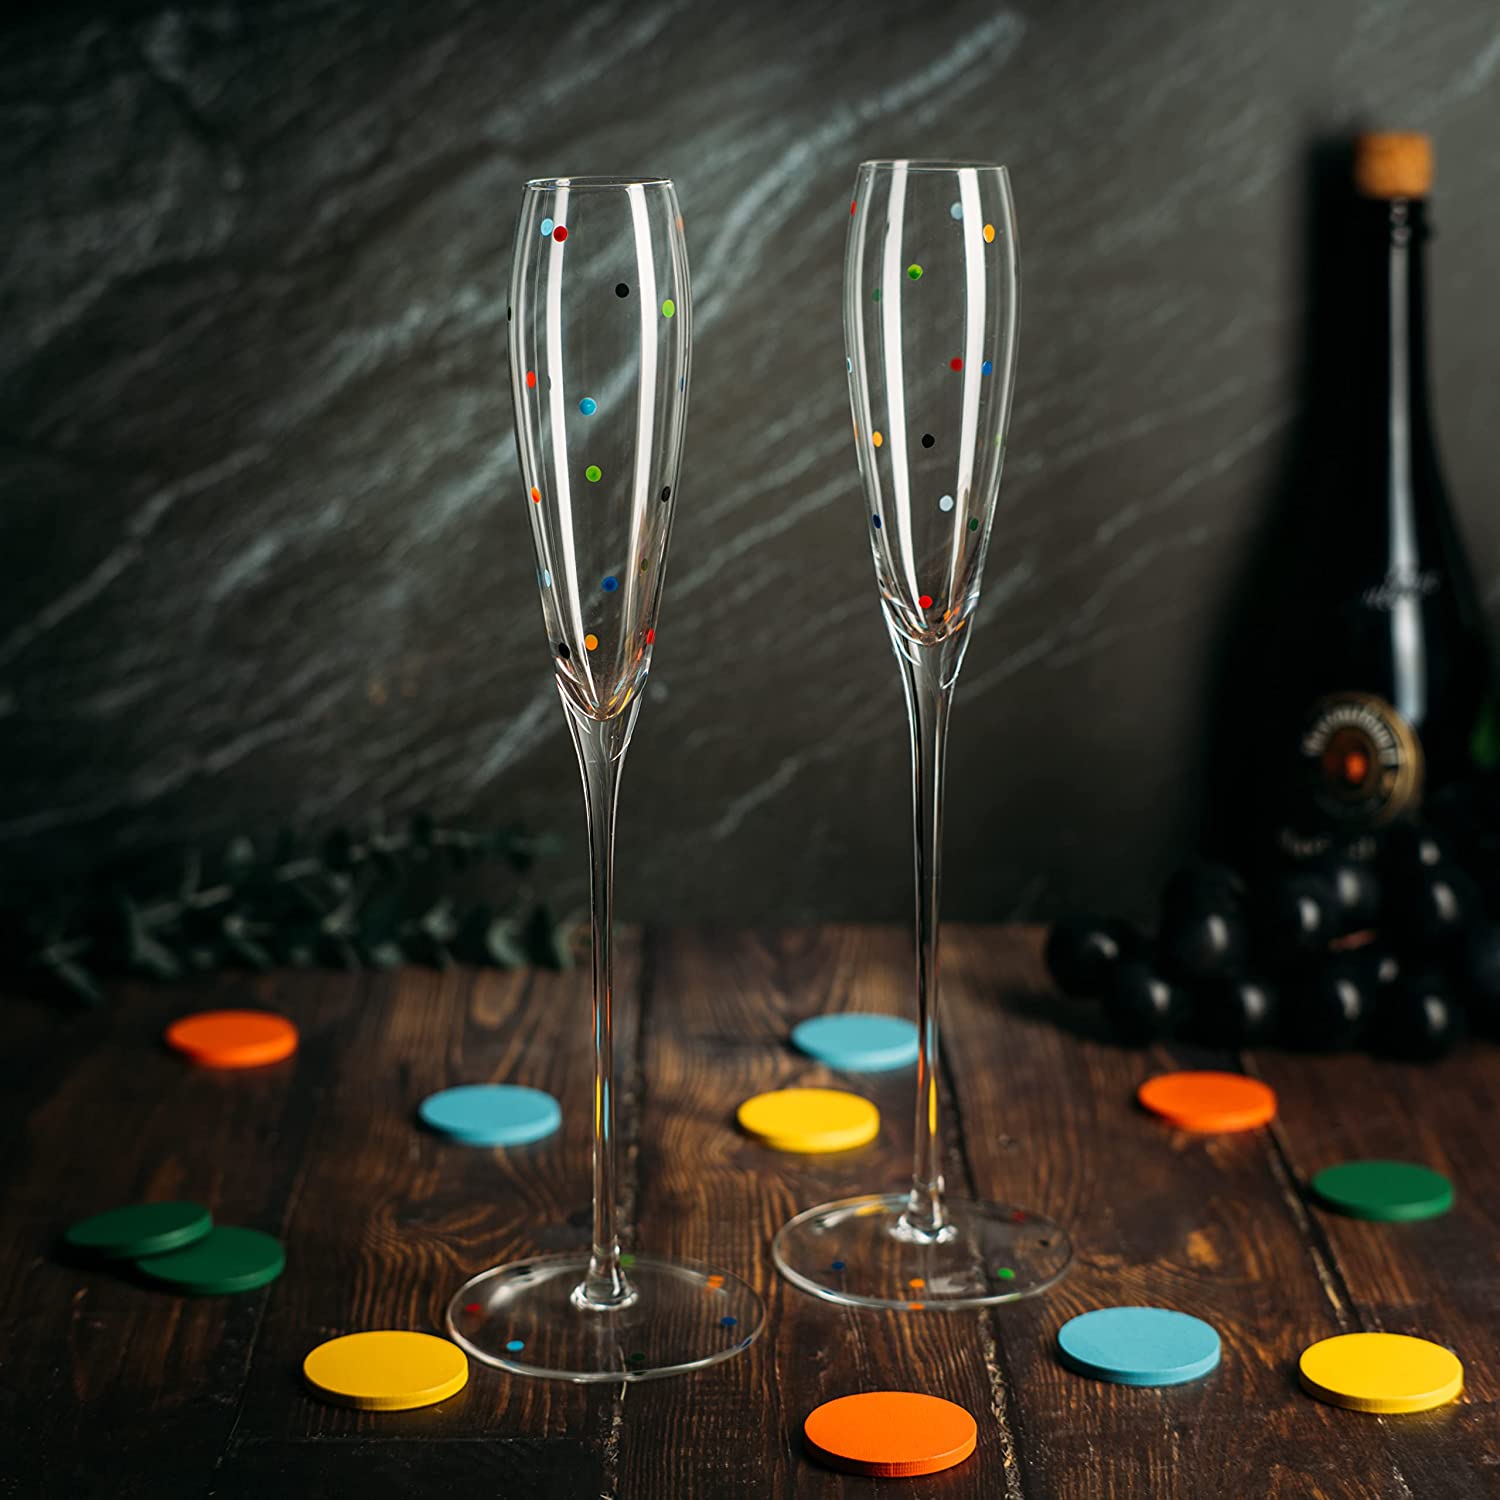 Set Of 2 Polka Dot Champagne Flutes Glasses 8oz By The Wine Savant